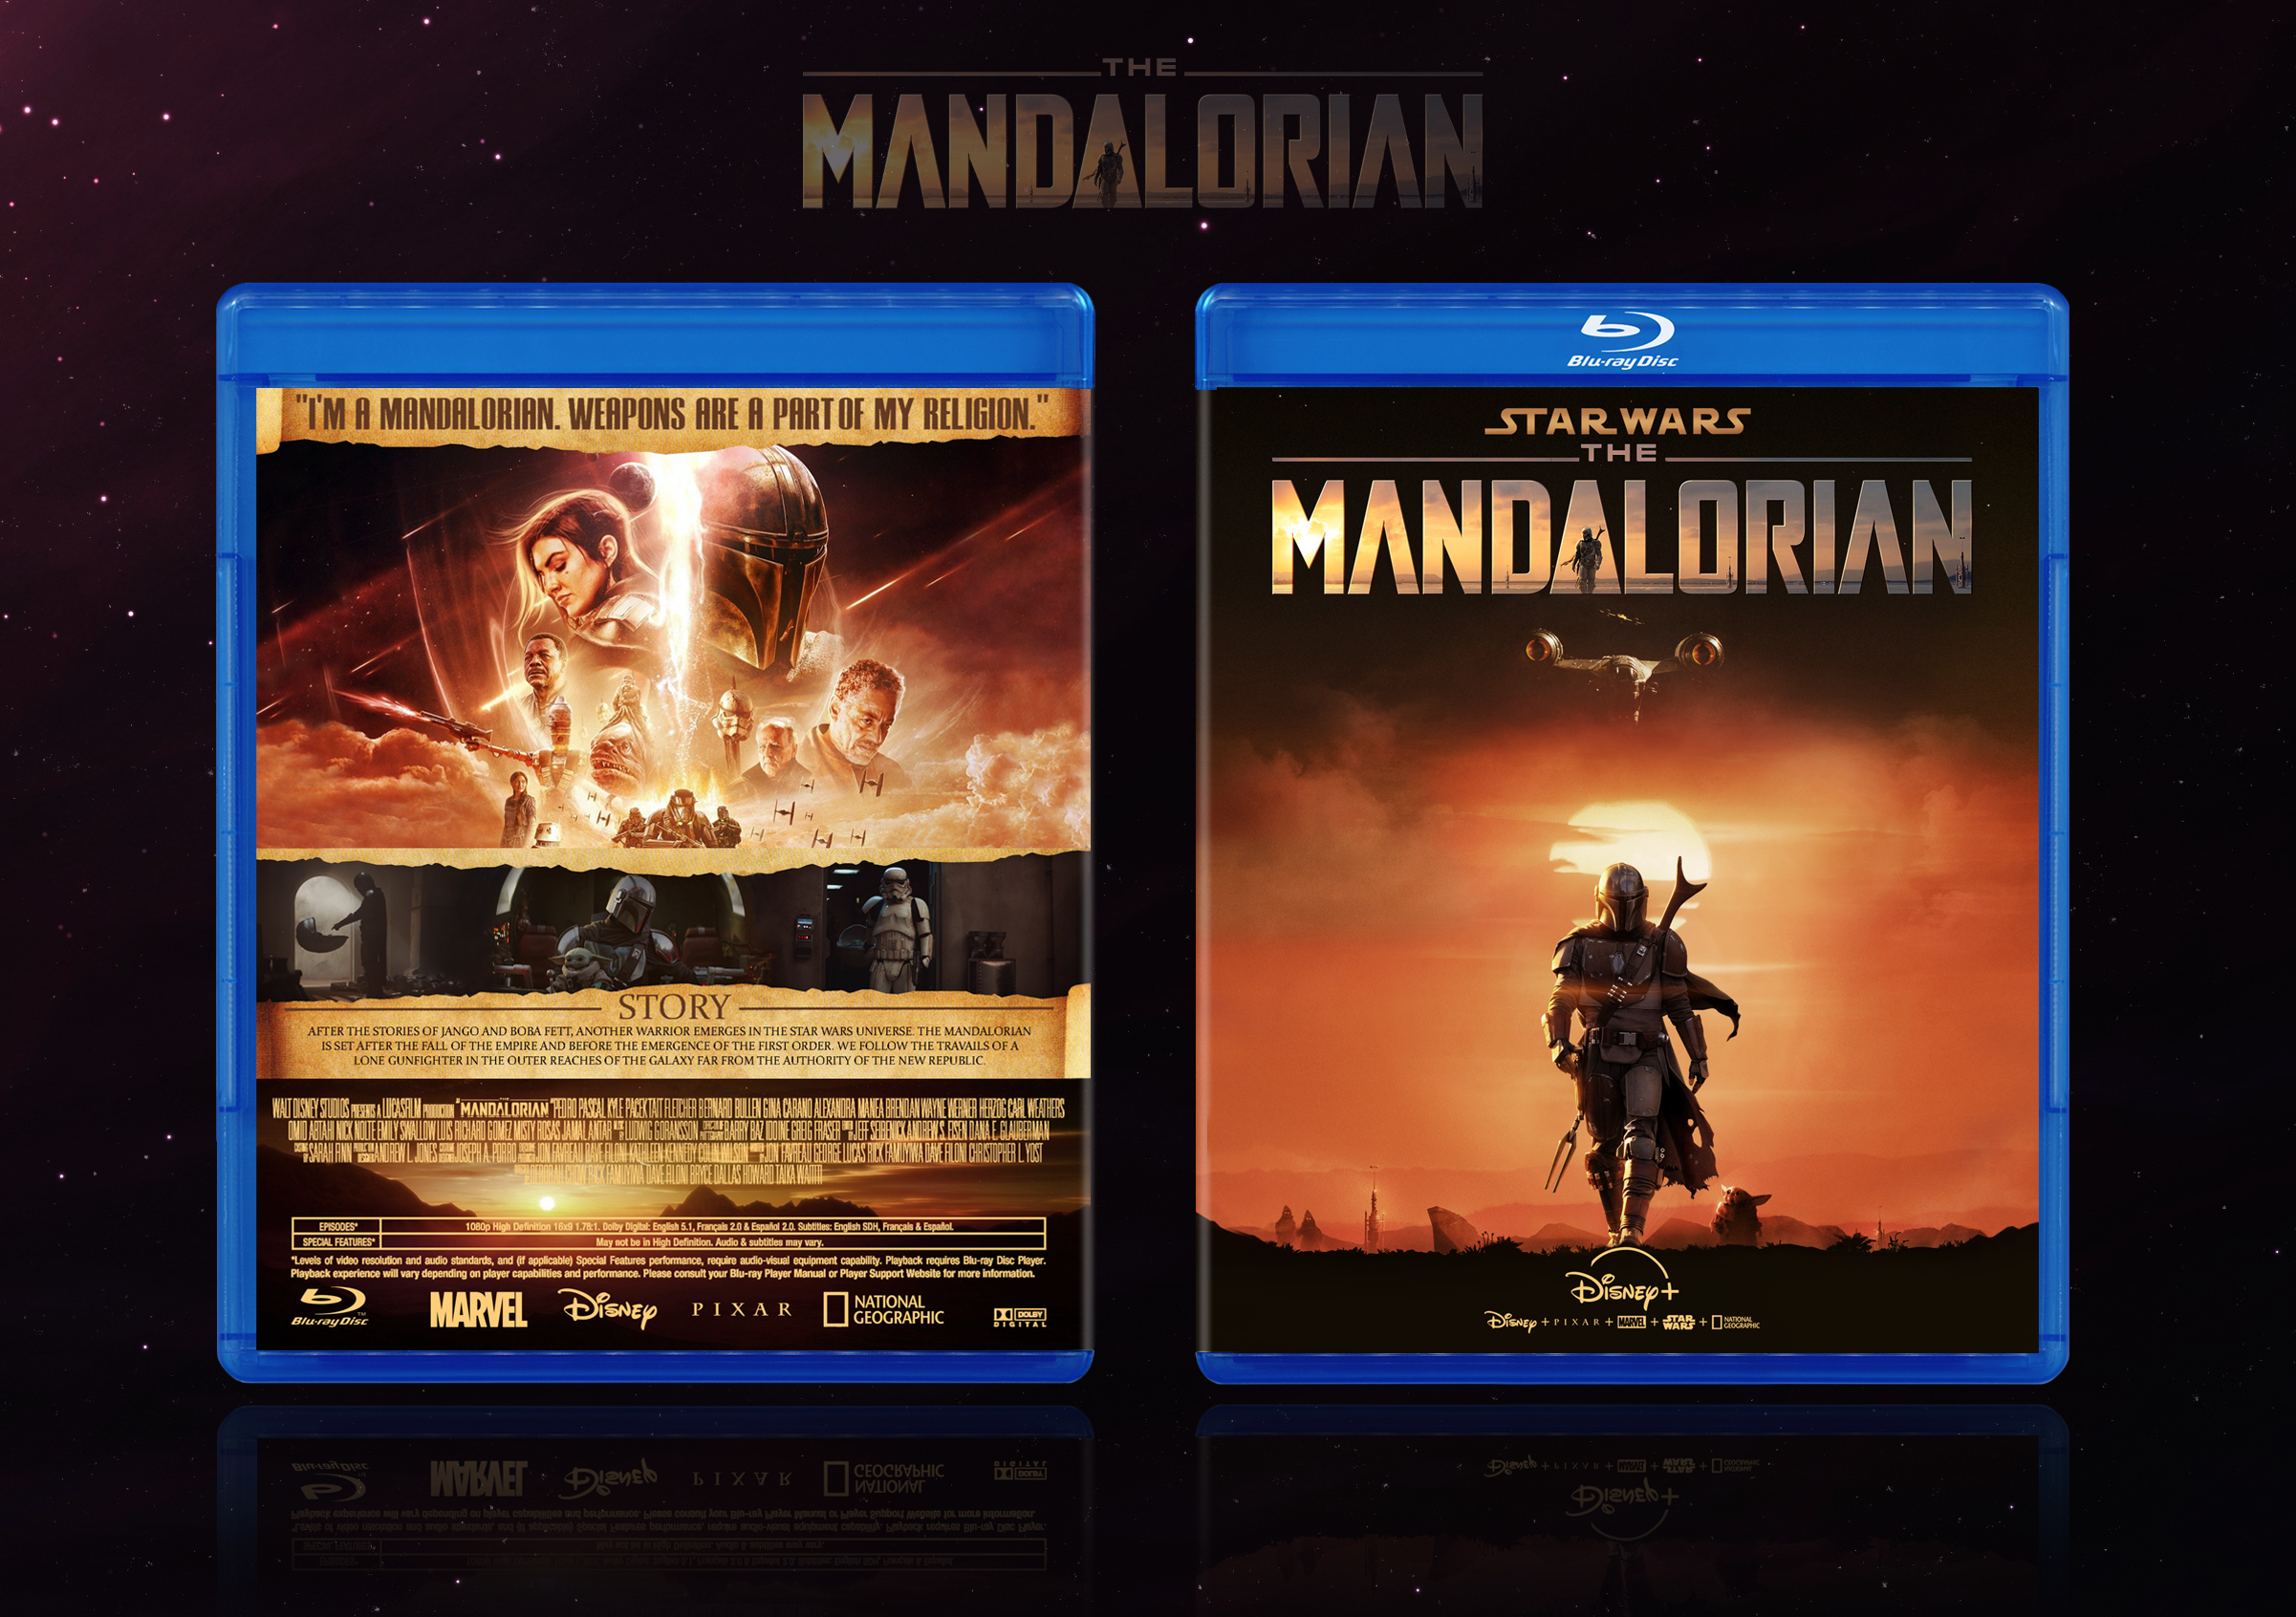 Star Wars: The Mandalorian box cover